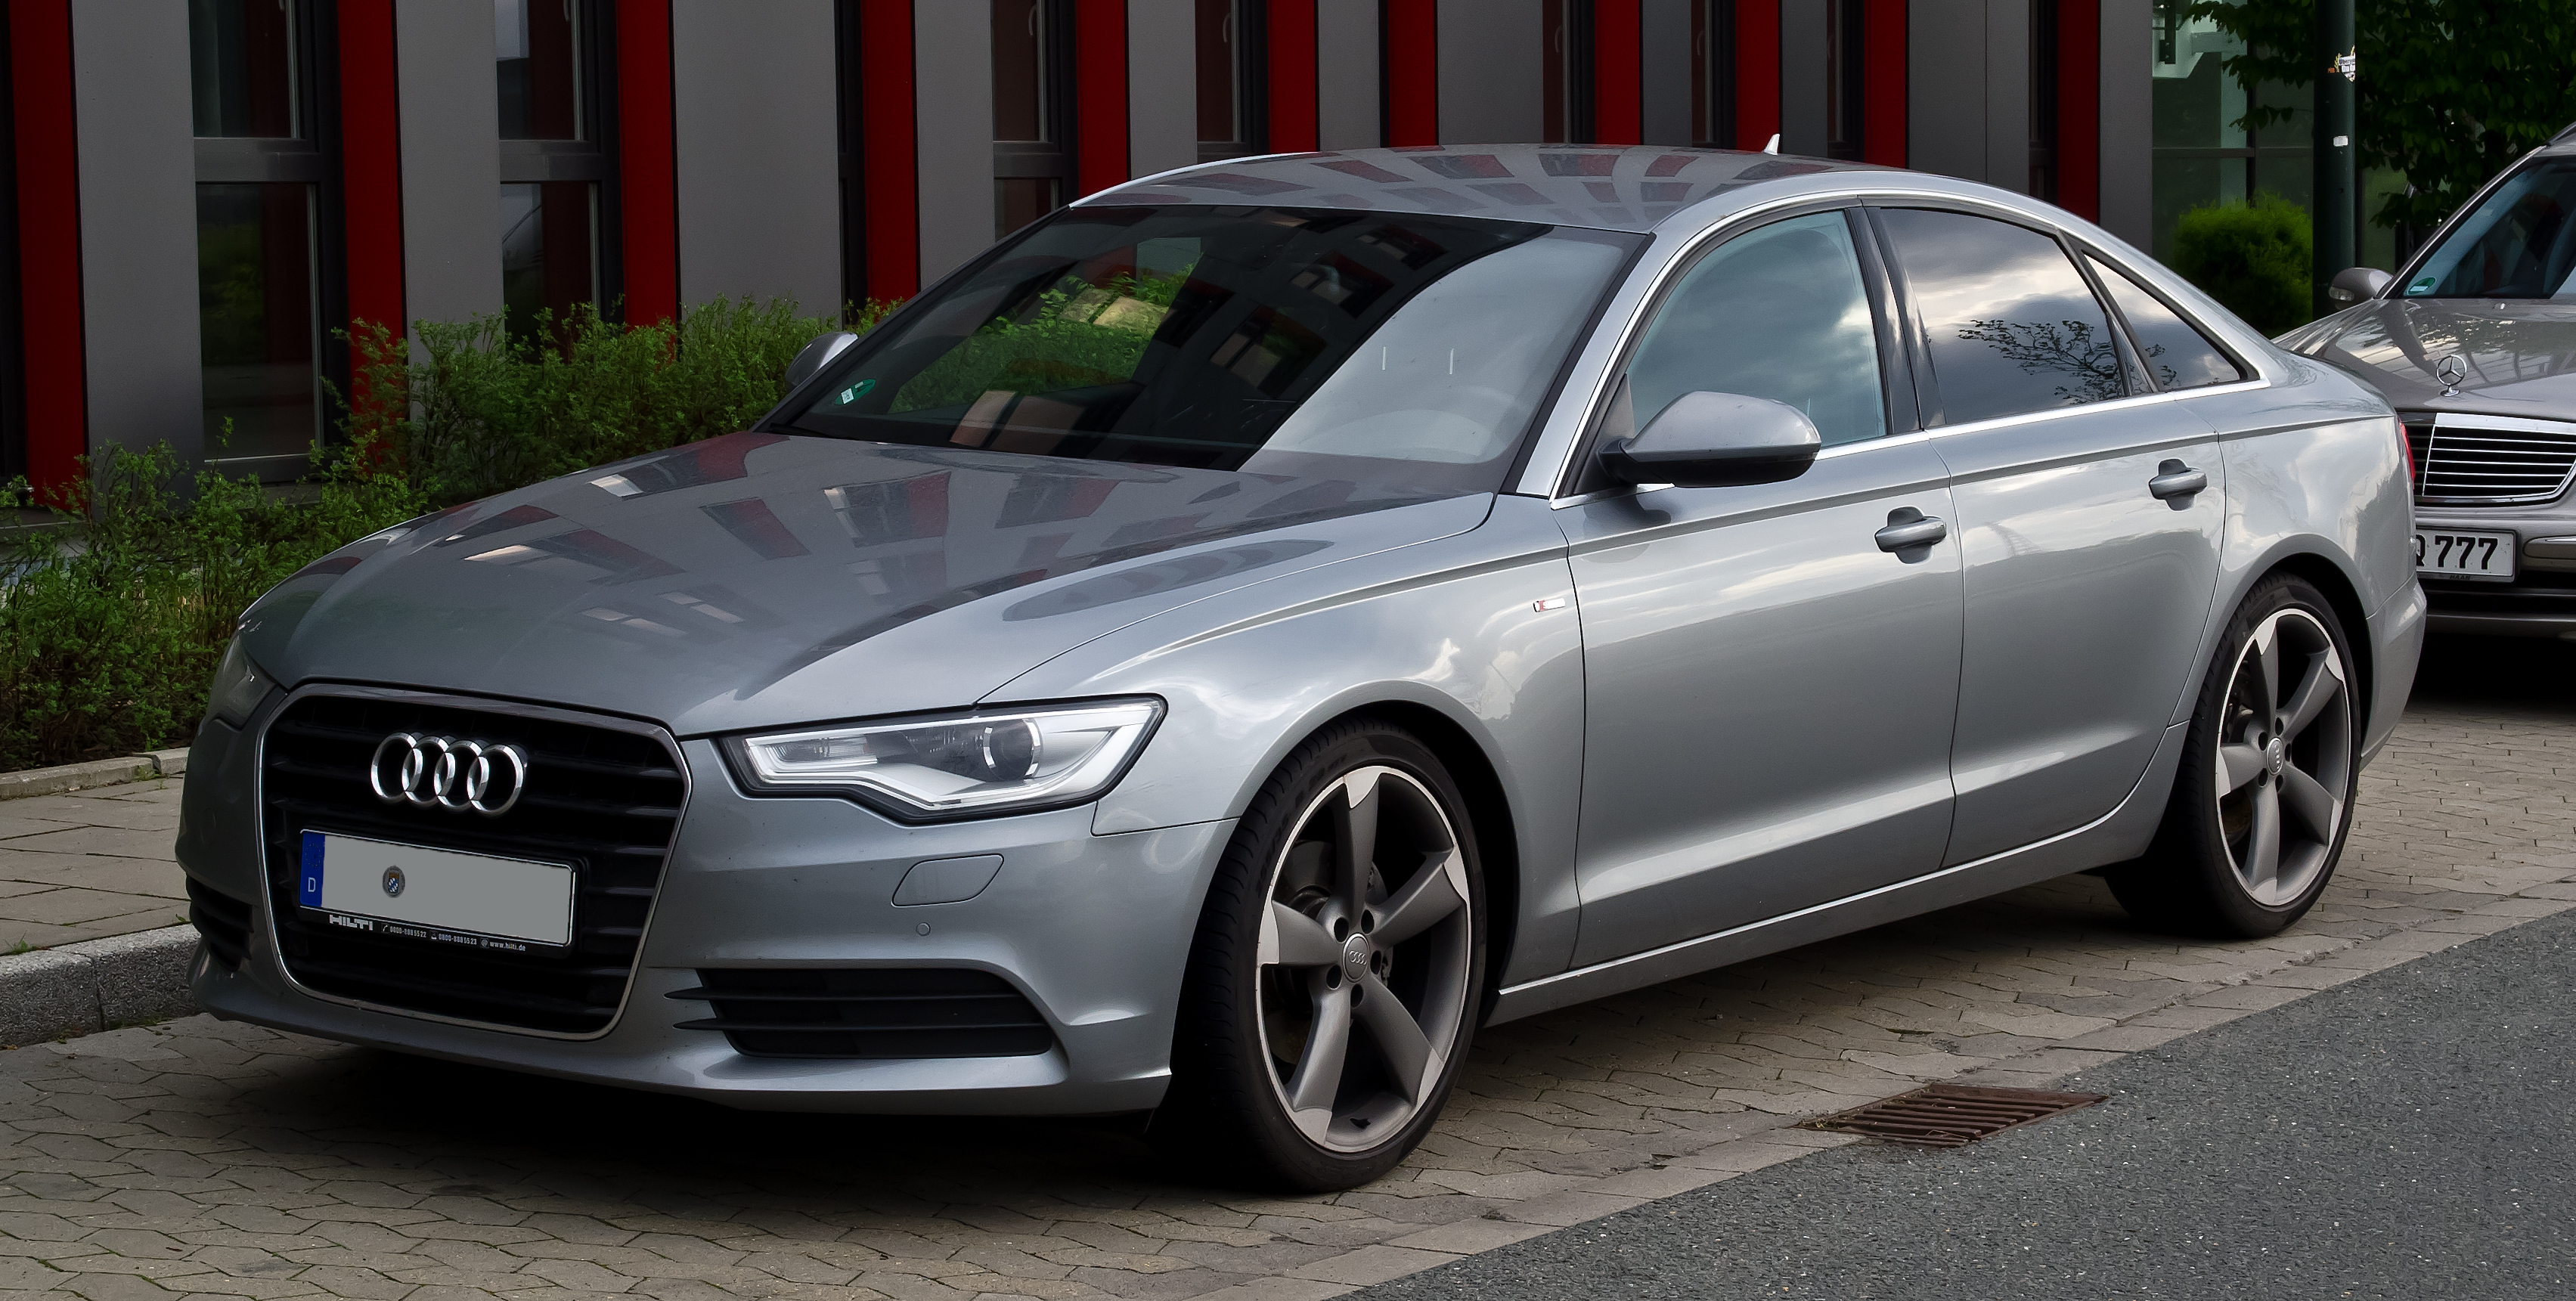 Audi_A6_S-line_%28C7%29_%E2%80%93_Fronta